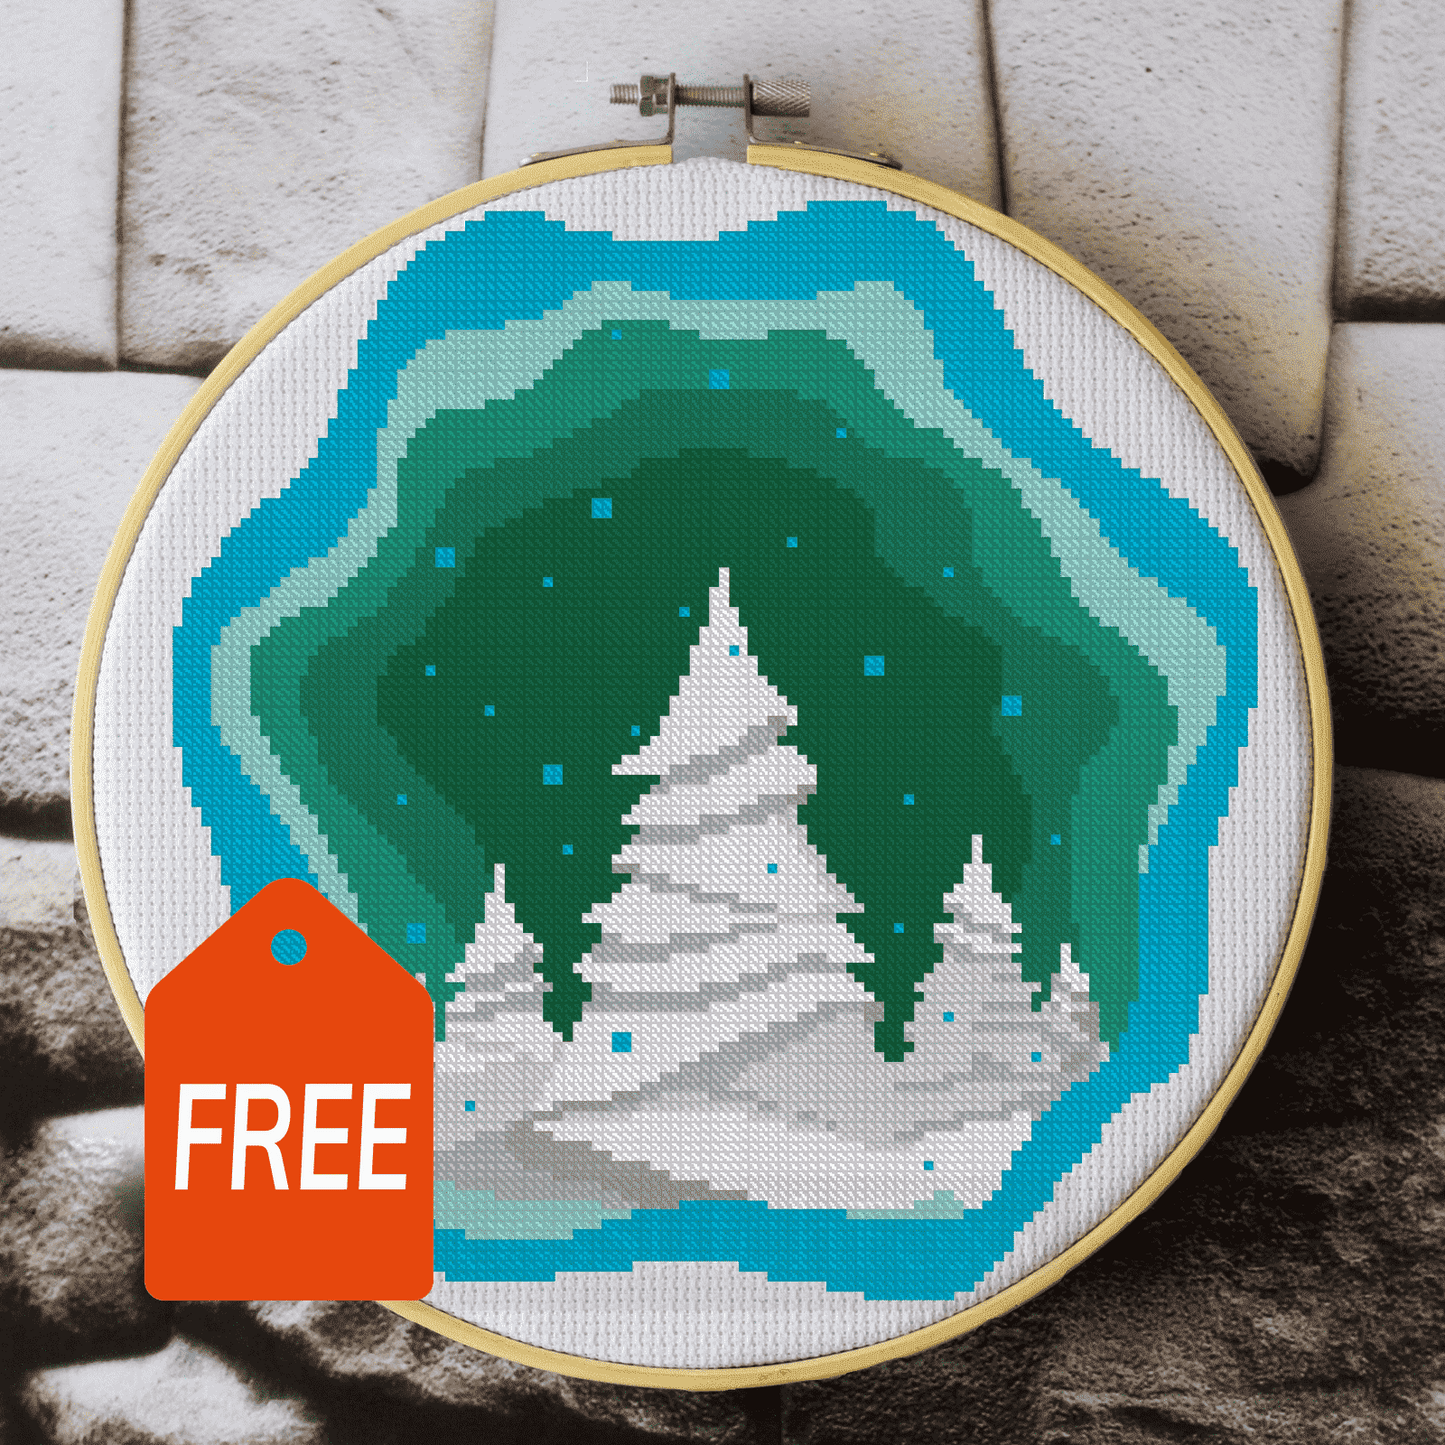 Snow Forest cross stitch pattern FREE